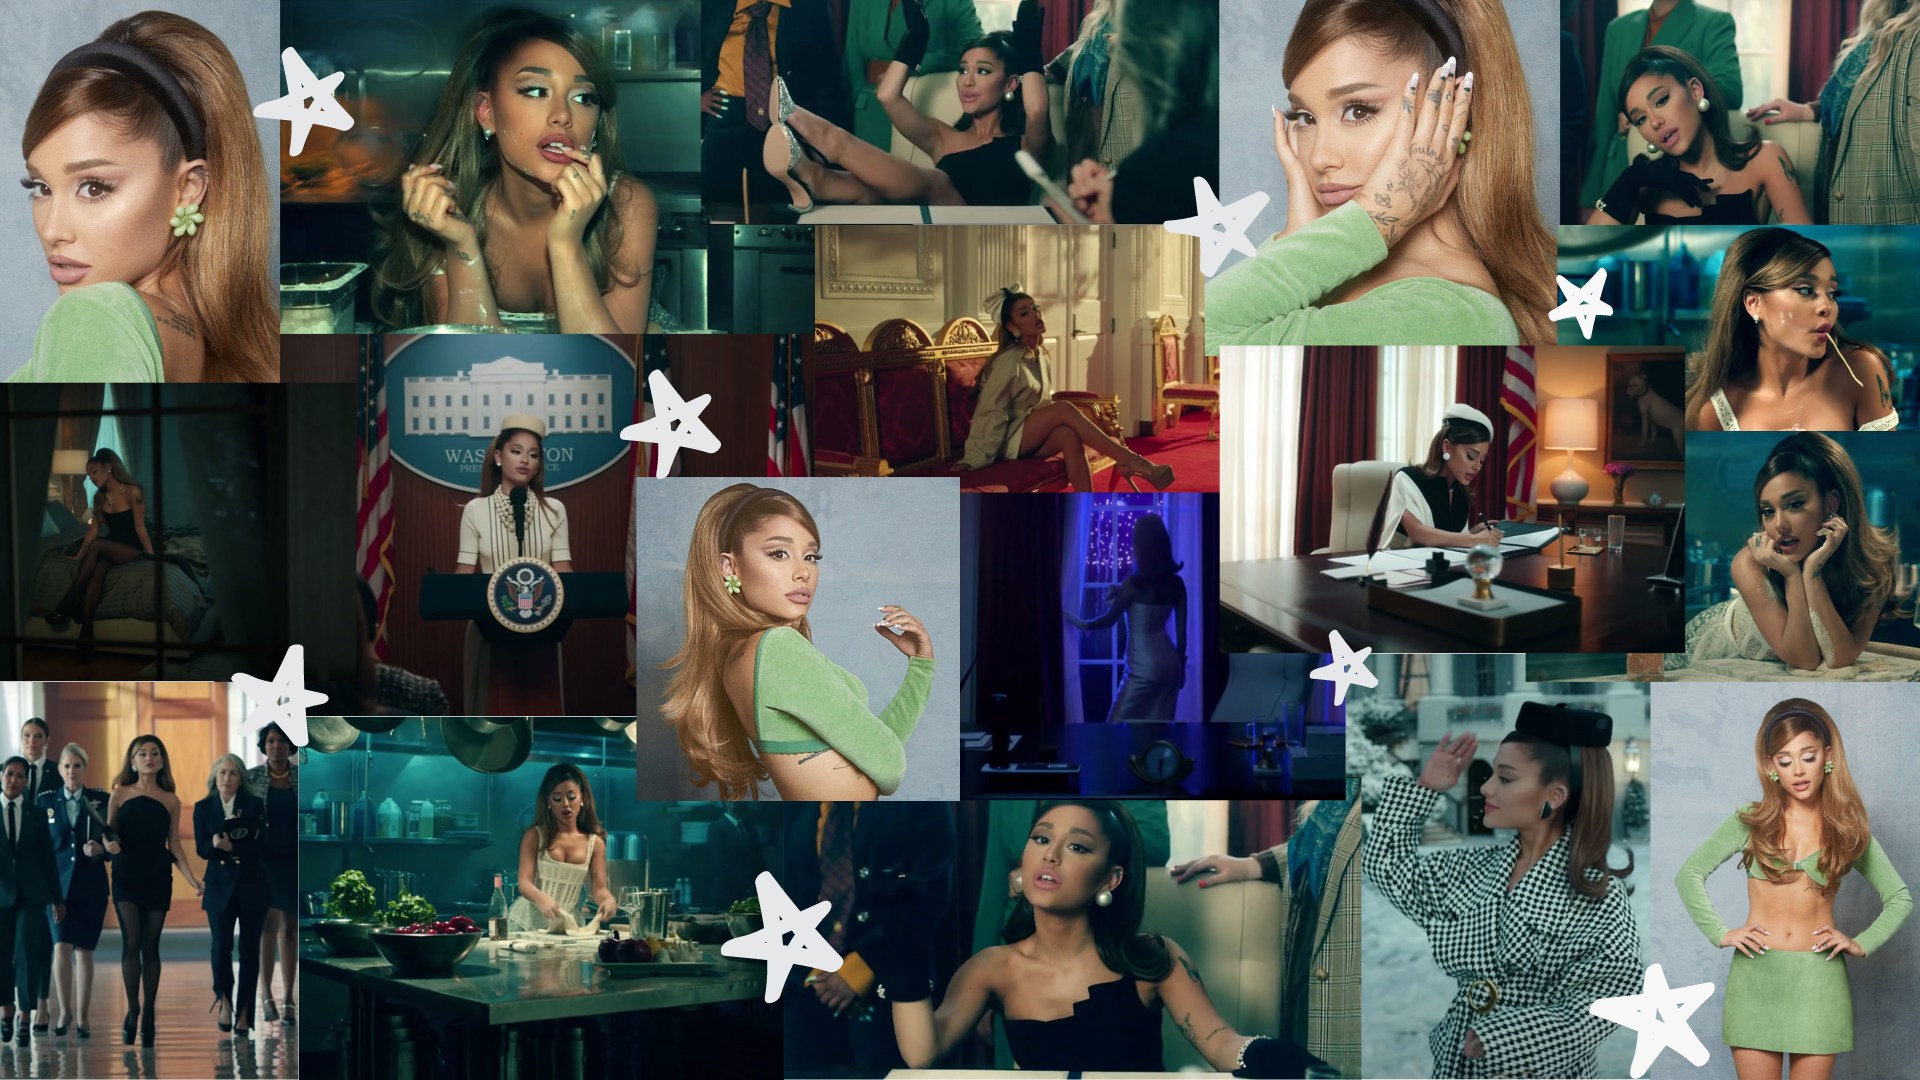 Positions Ariana Grande desktop wallpaper. Ariana grande background, Ariana grande concert, Ariana grande wallpaper